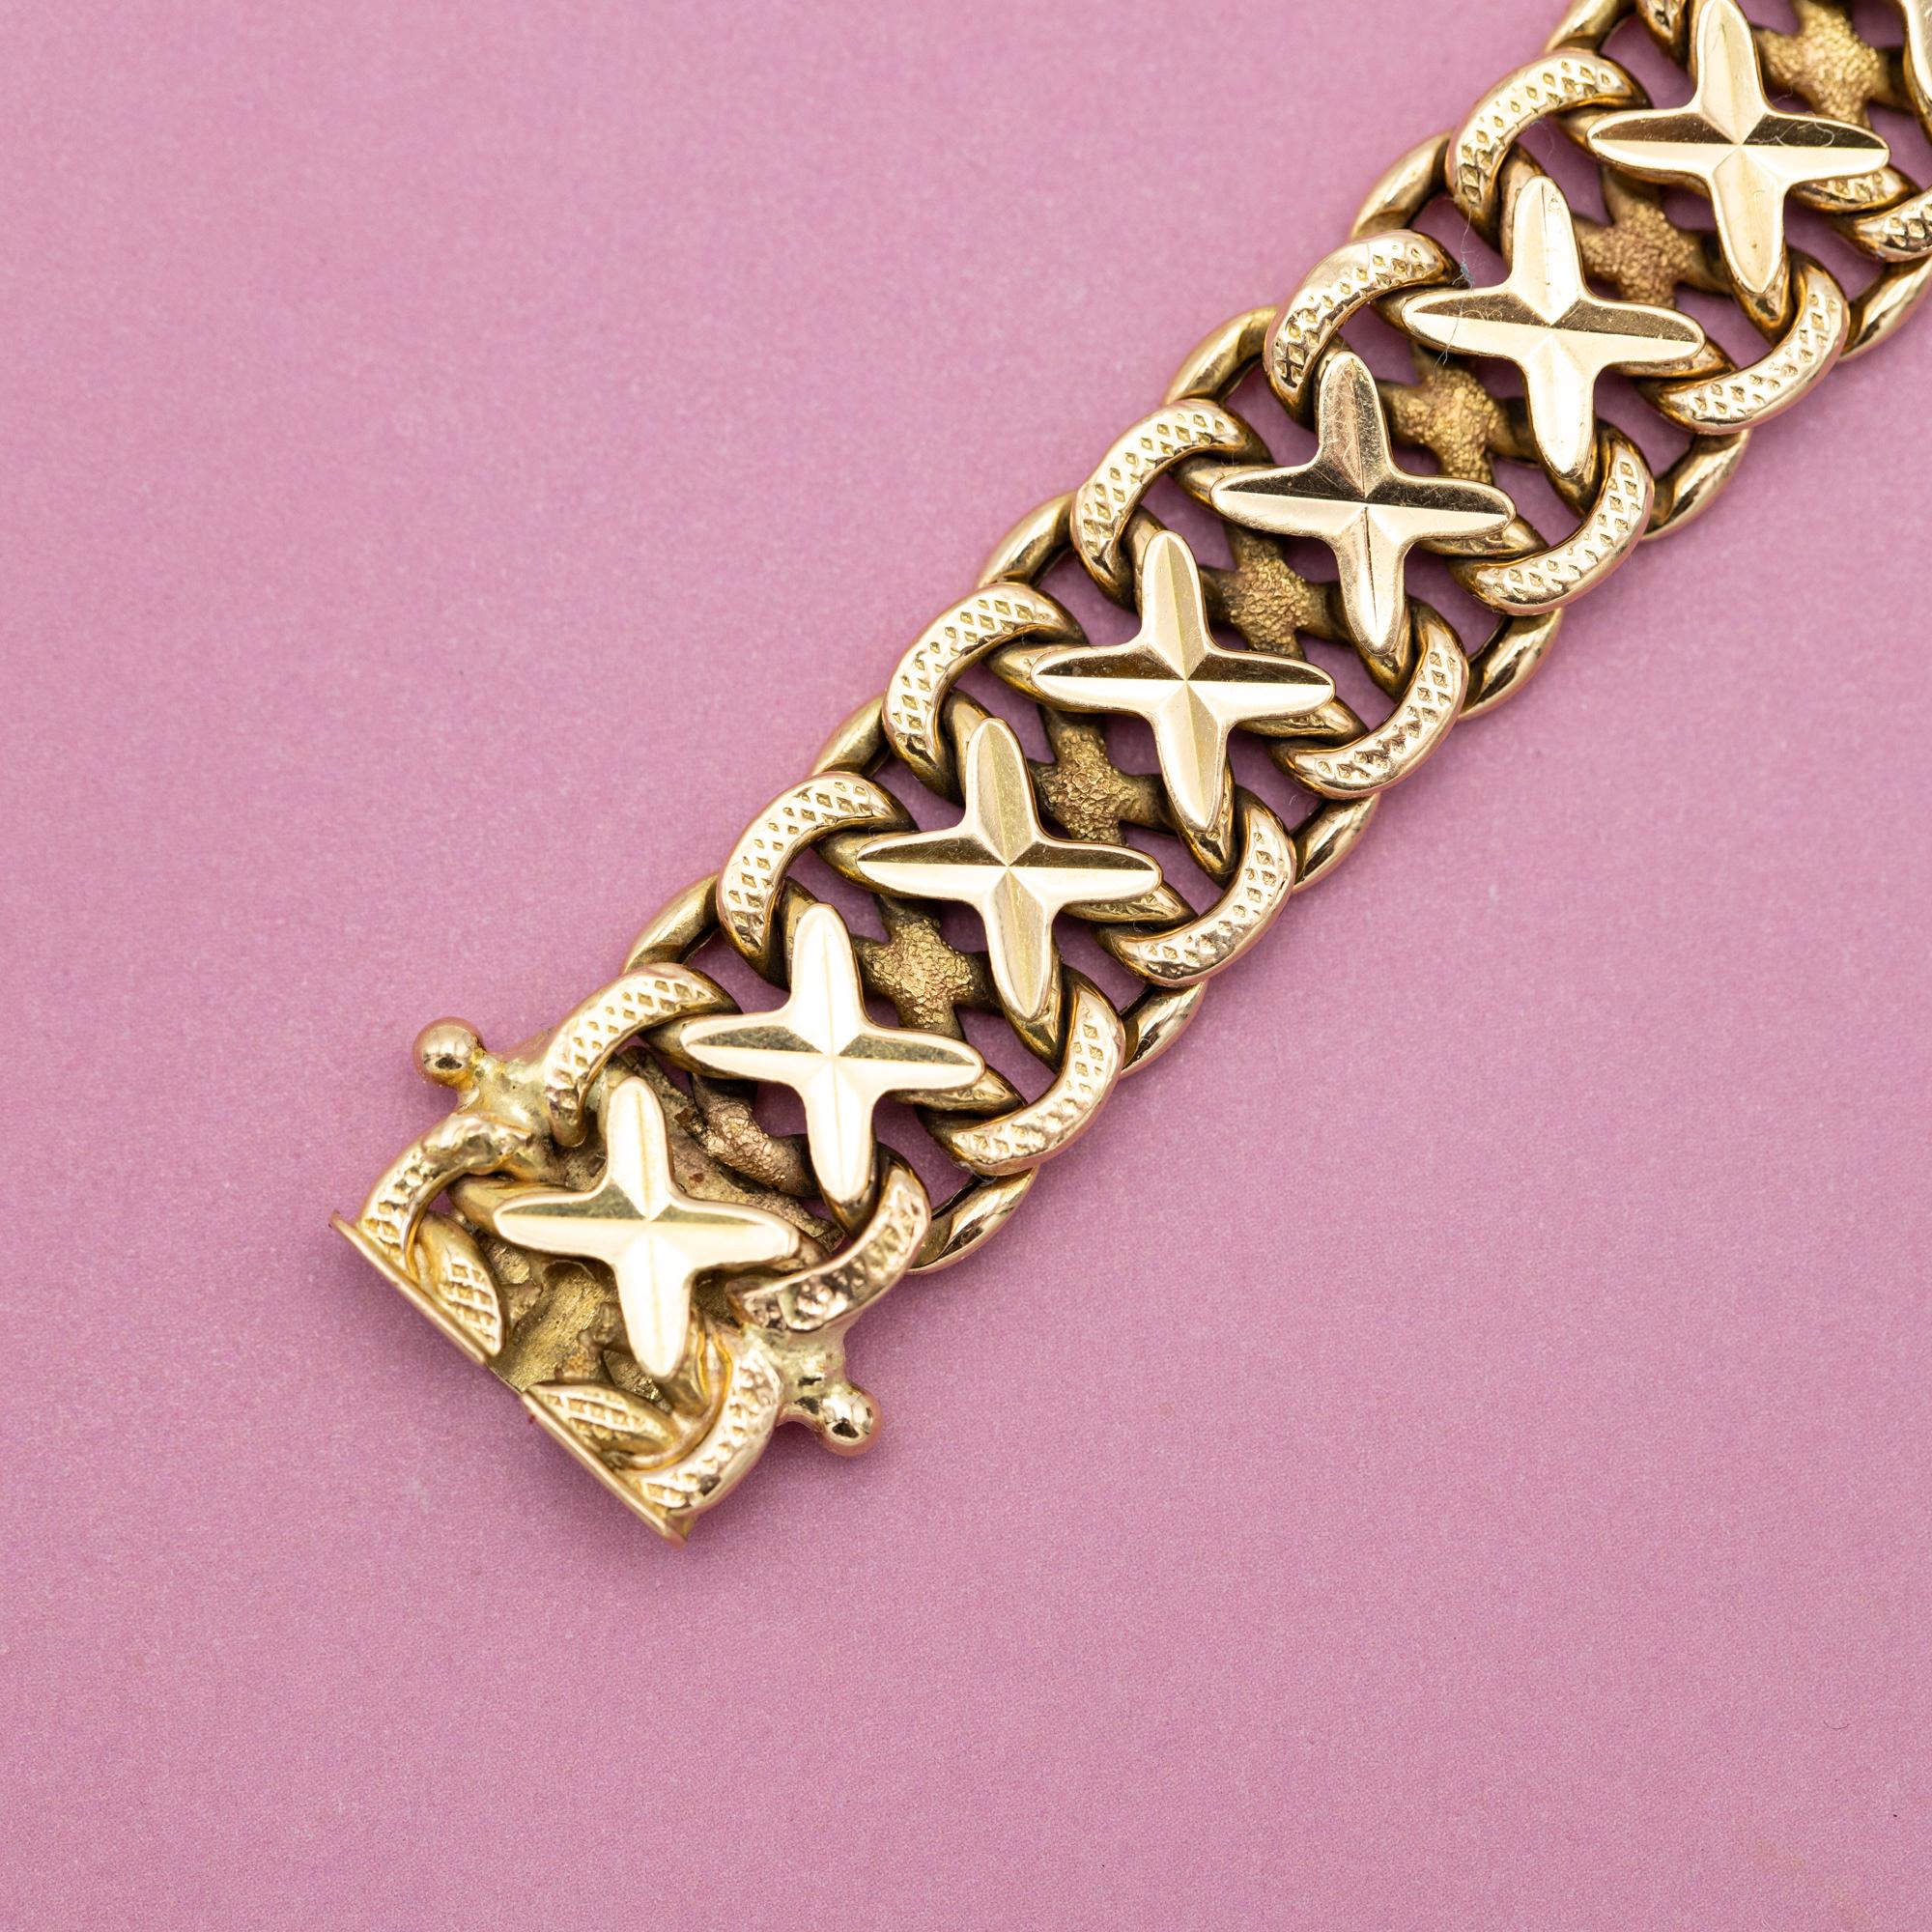 French 1940's 18k gold bracelet, wide mesh links, Flat retro bracelet For Sale 2